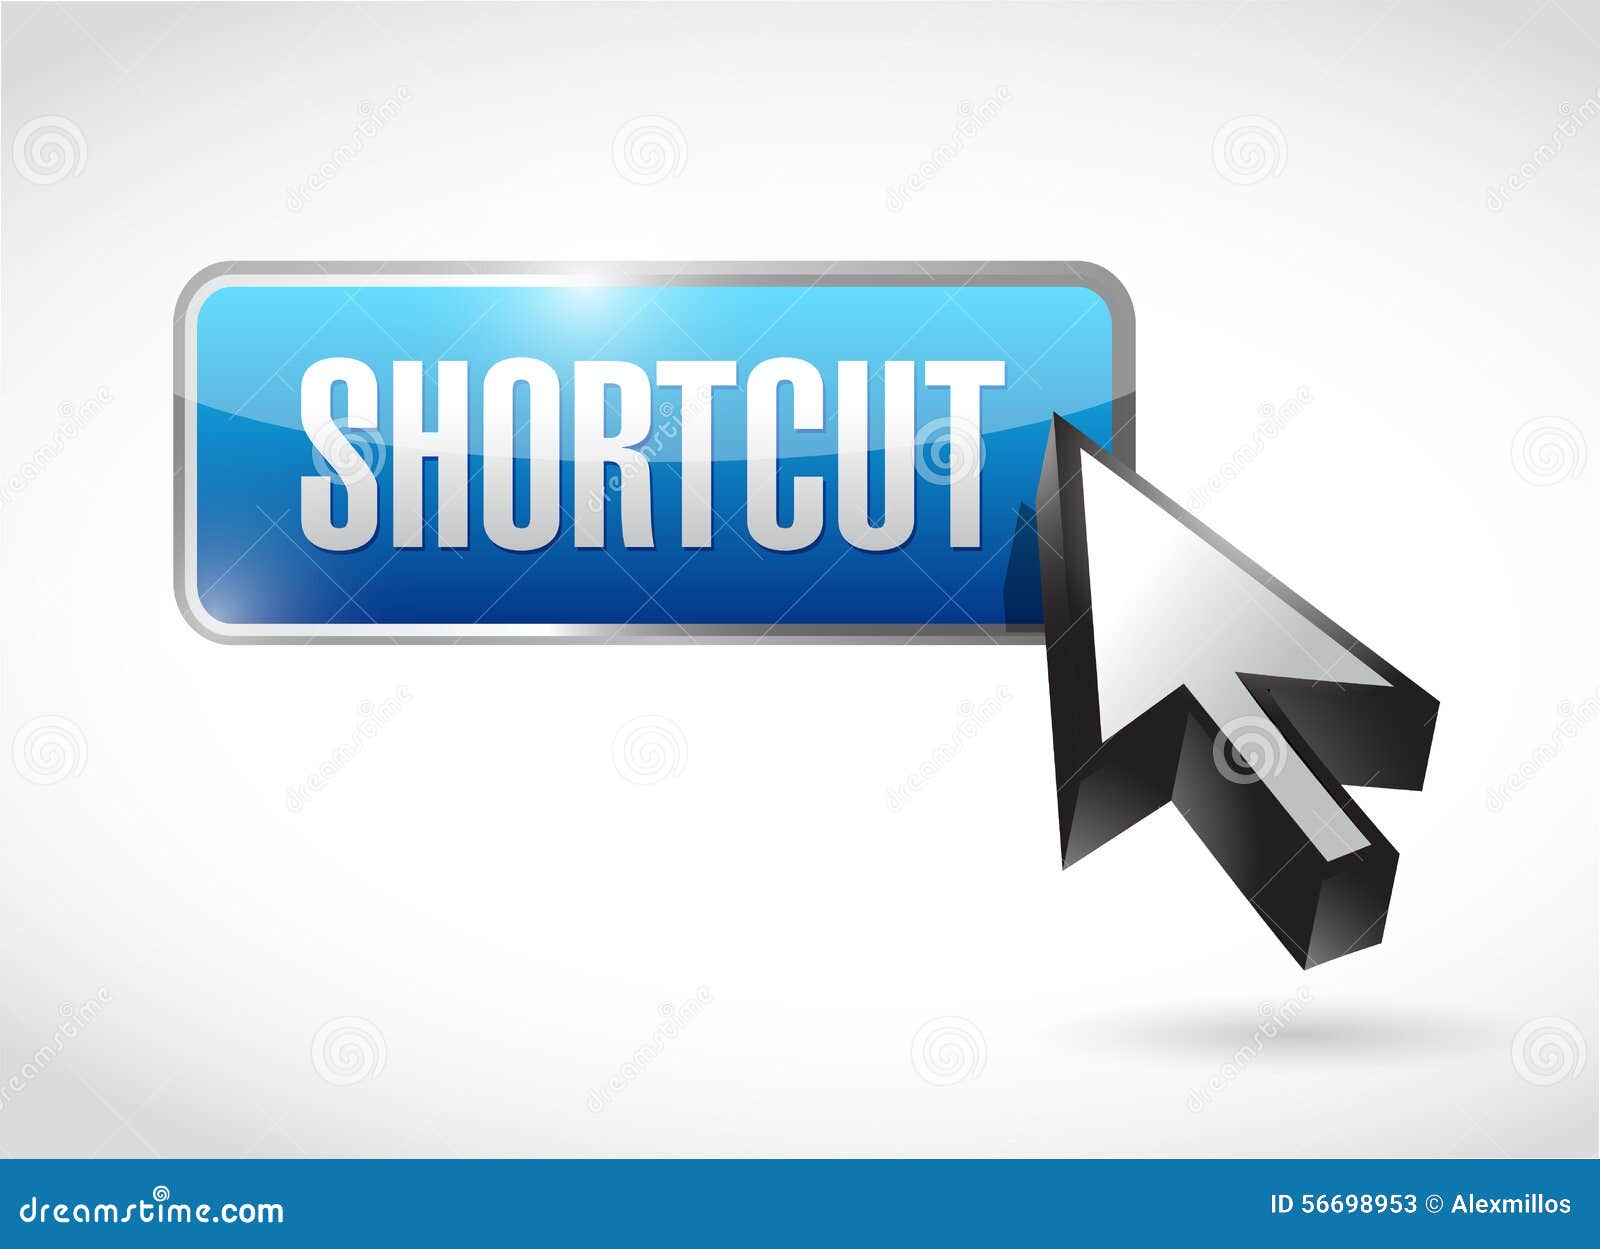 clipart shortcut key - photo #16